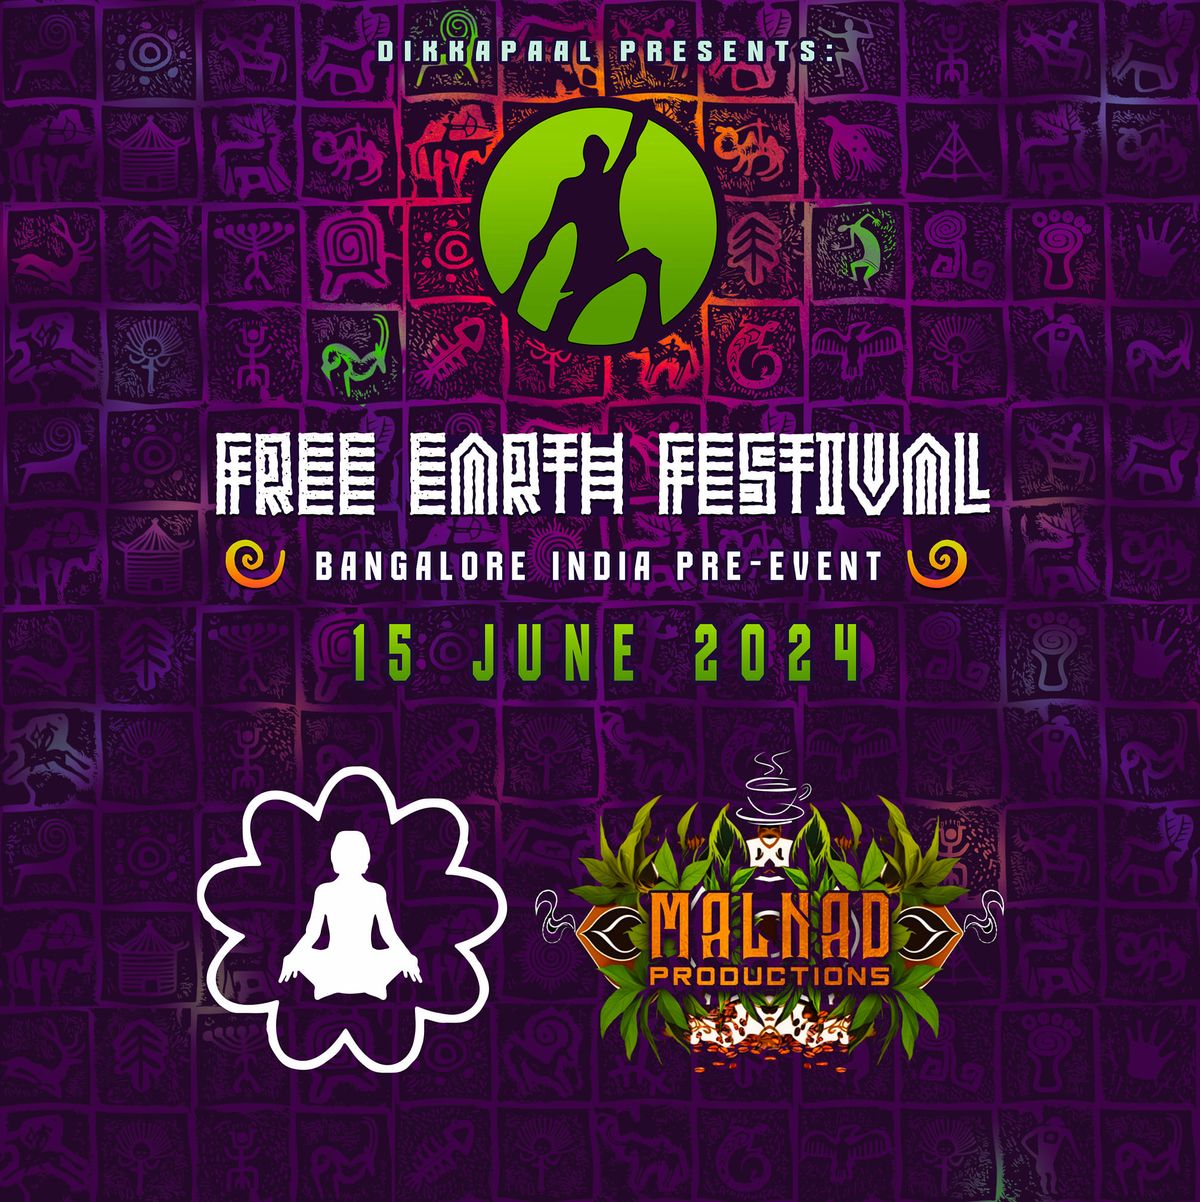 Free Earth Festival : Promo - Bangalore